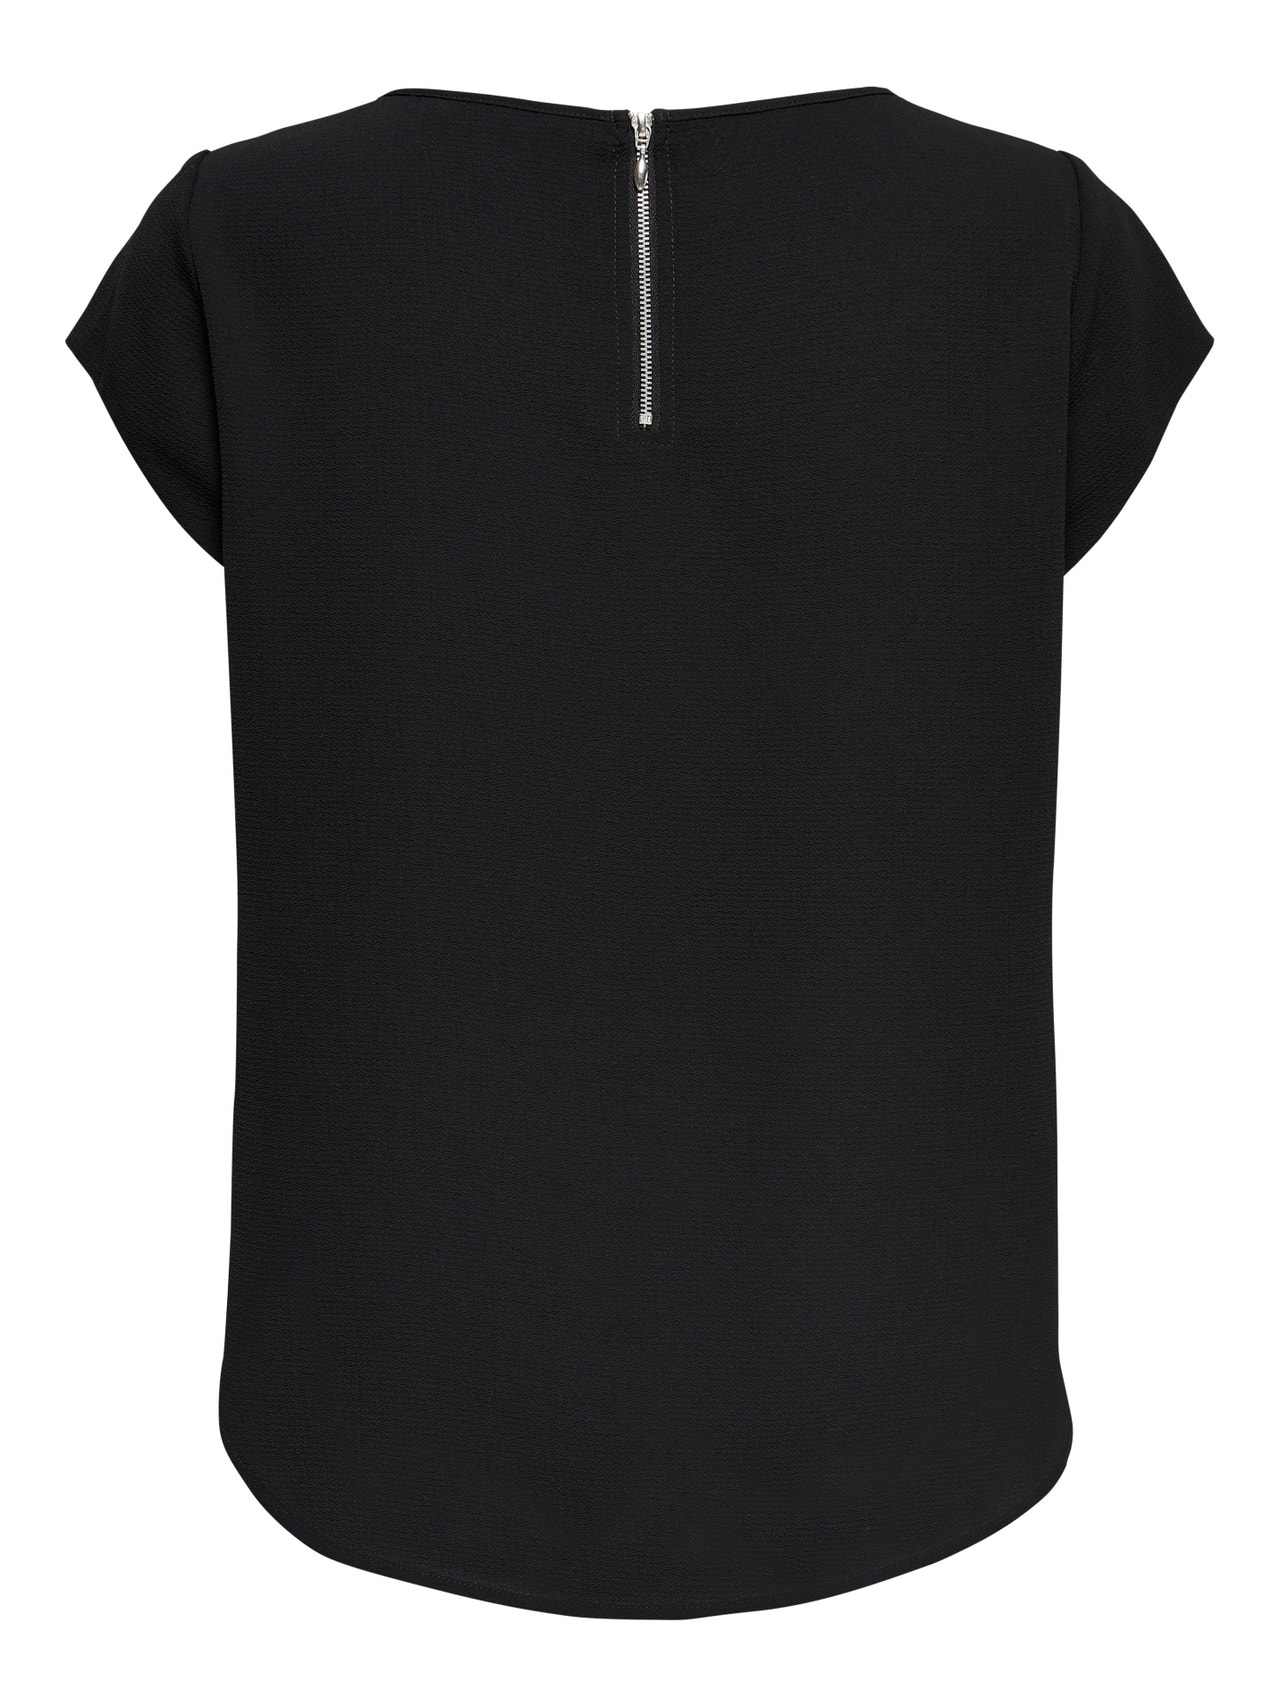 ONLY Loose Short Sleeved Top -Black - 15142784